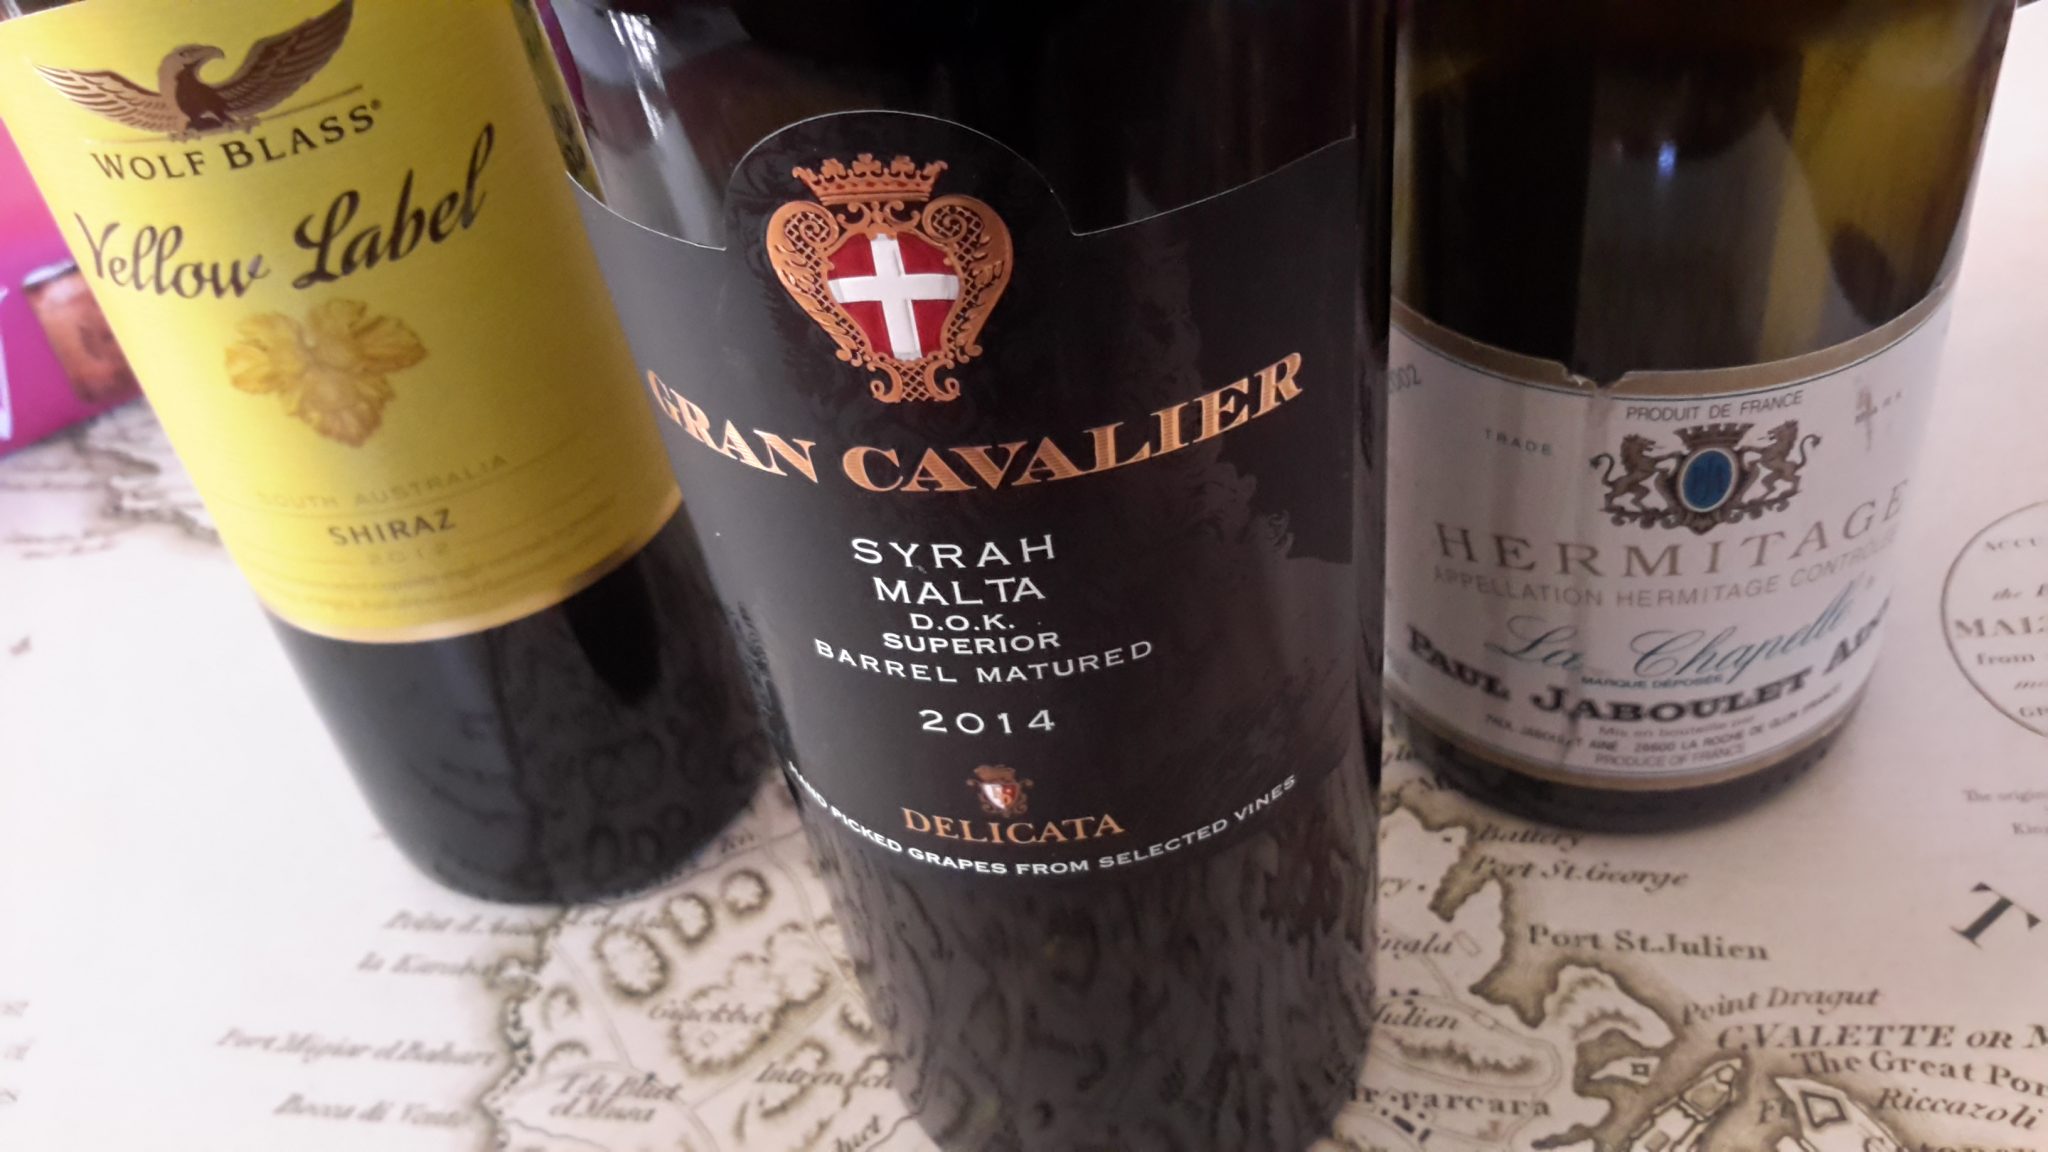 World-class Syrah wine from Malta